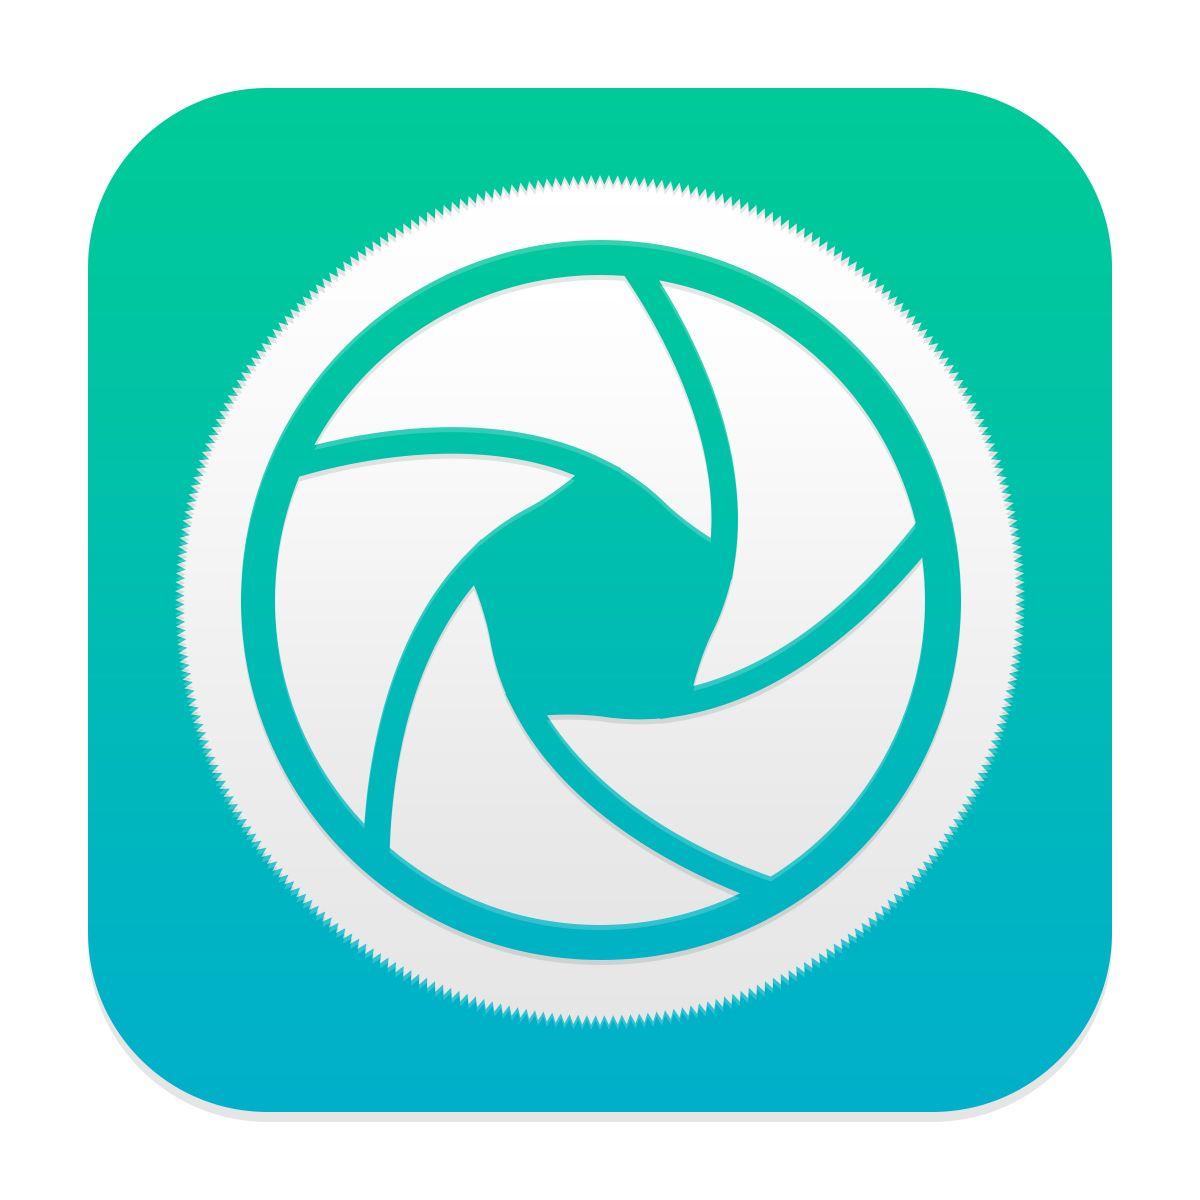 Camera App Logo - iOS7 Camera app icon | Best App Icons | Pinterest | Graphique